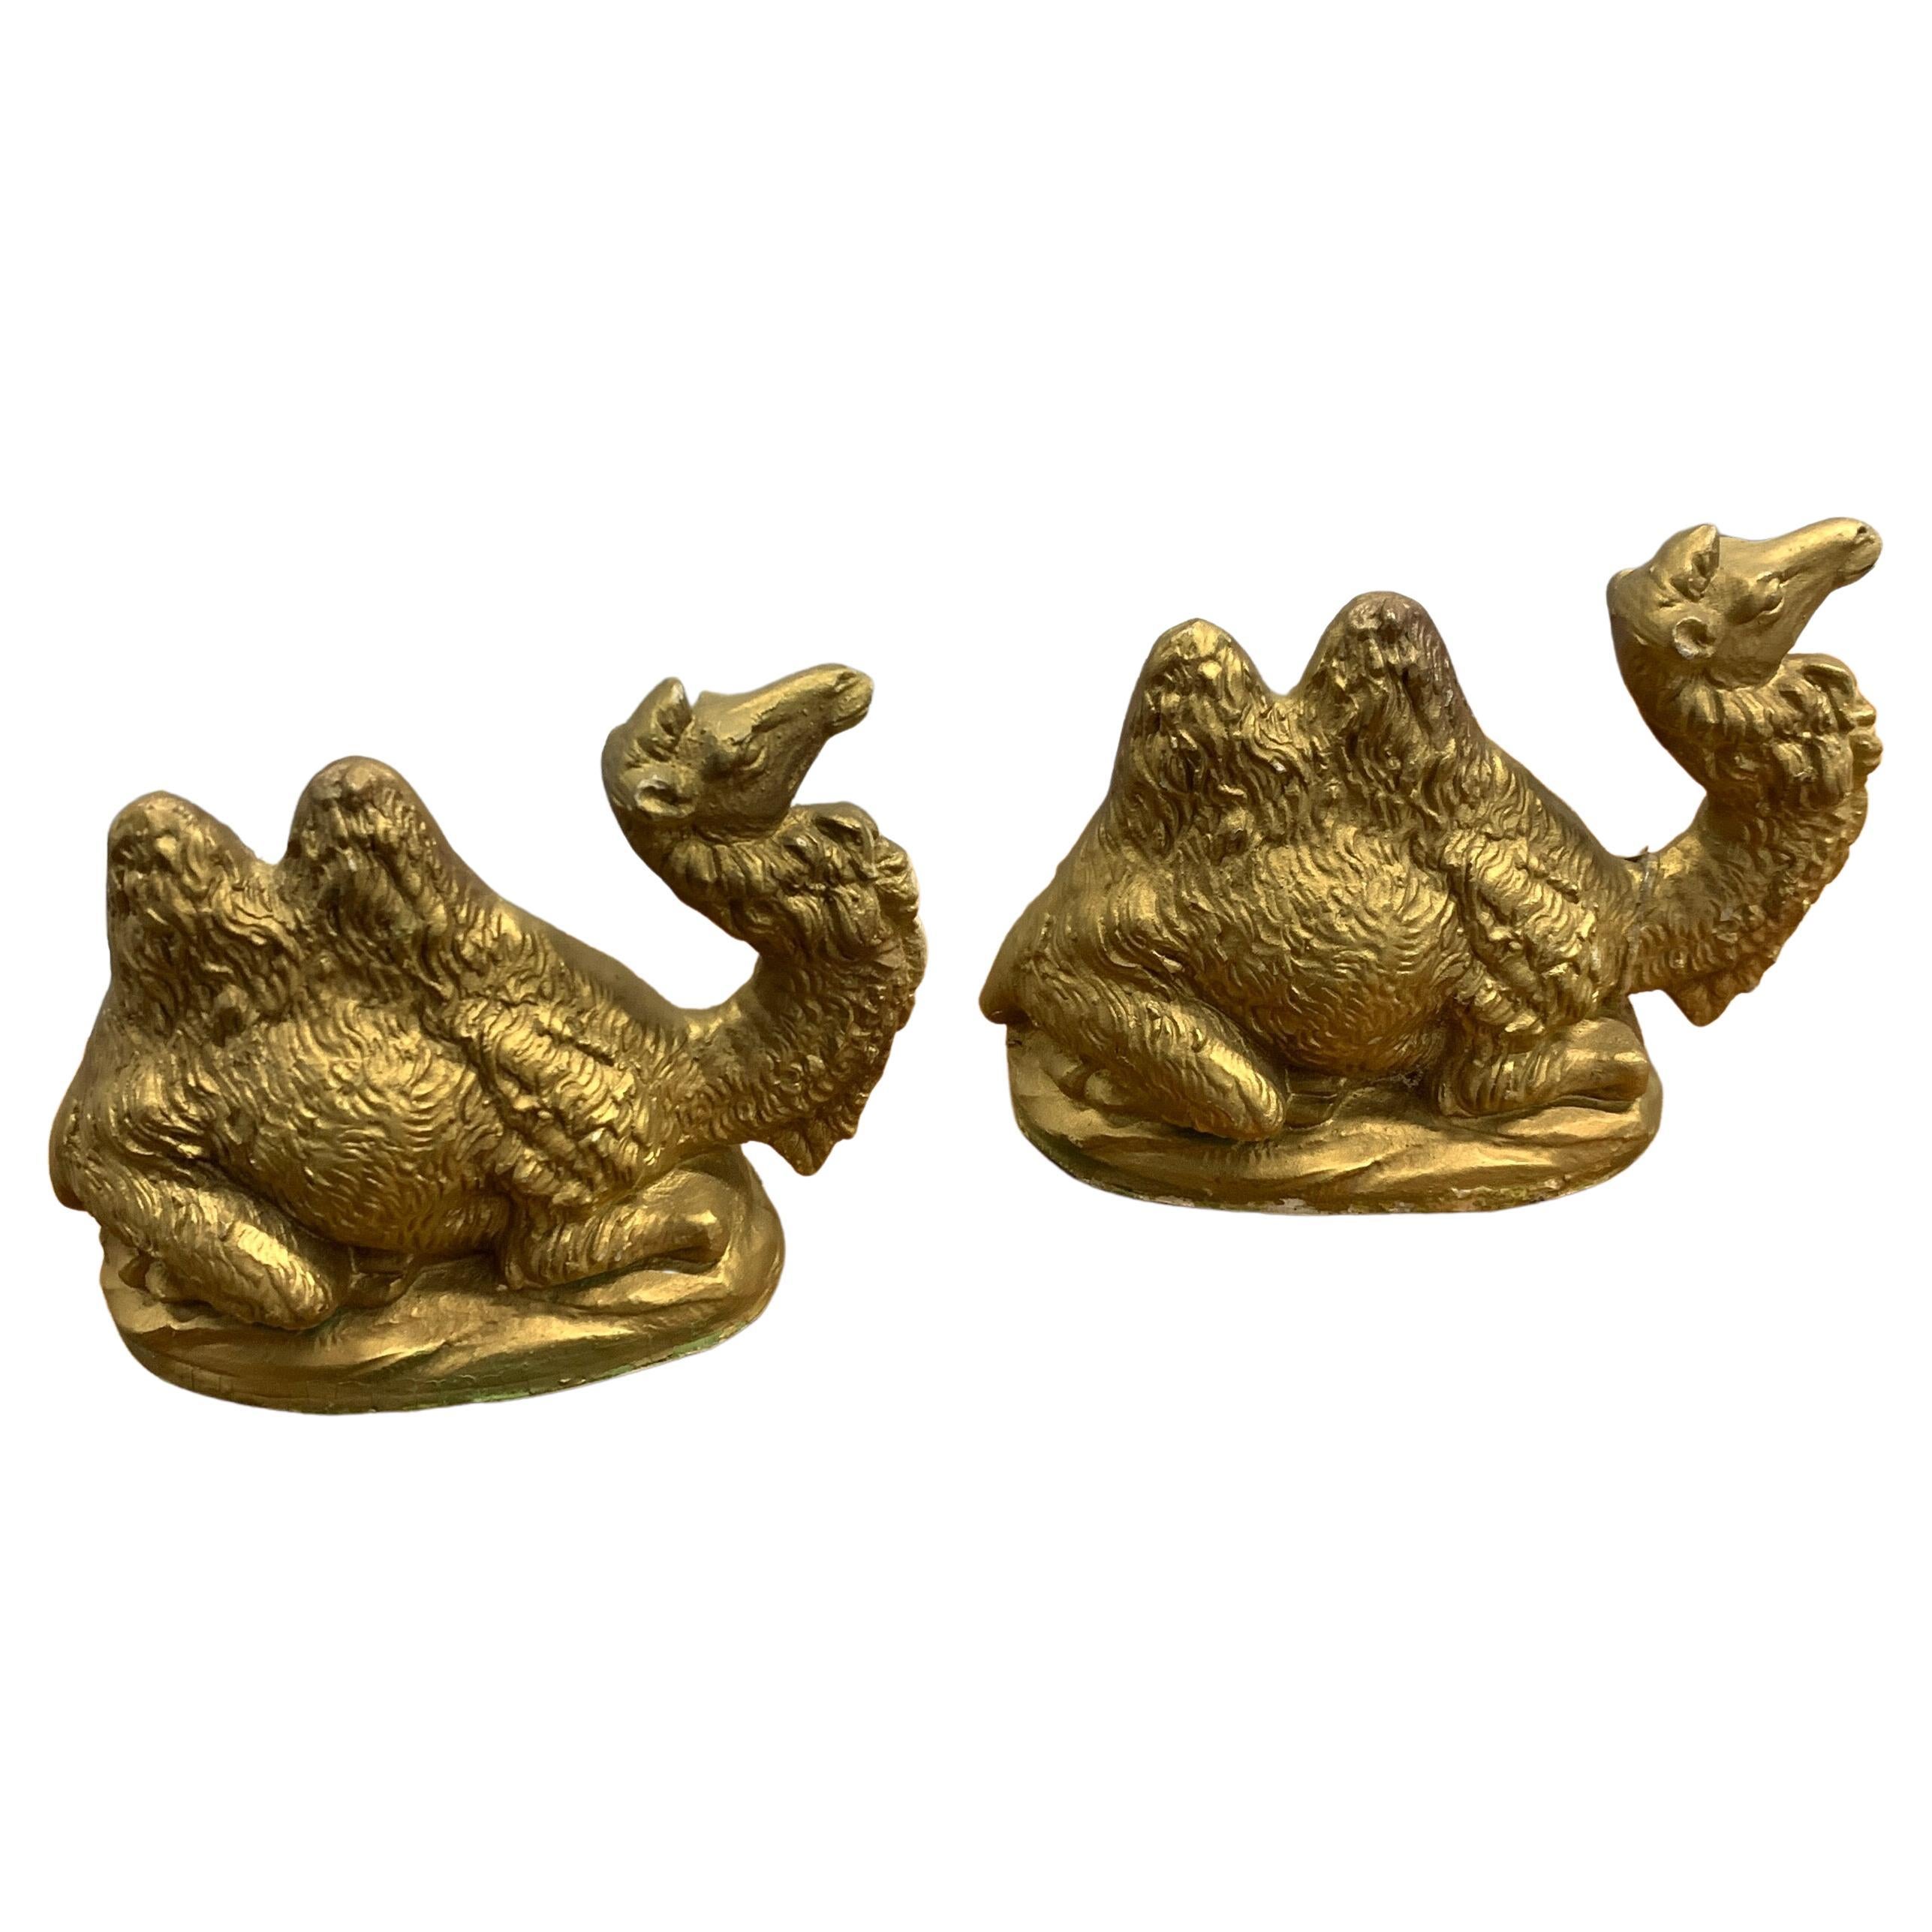 Vintage Italian Gold Gilt Camel Figures, a Pair